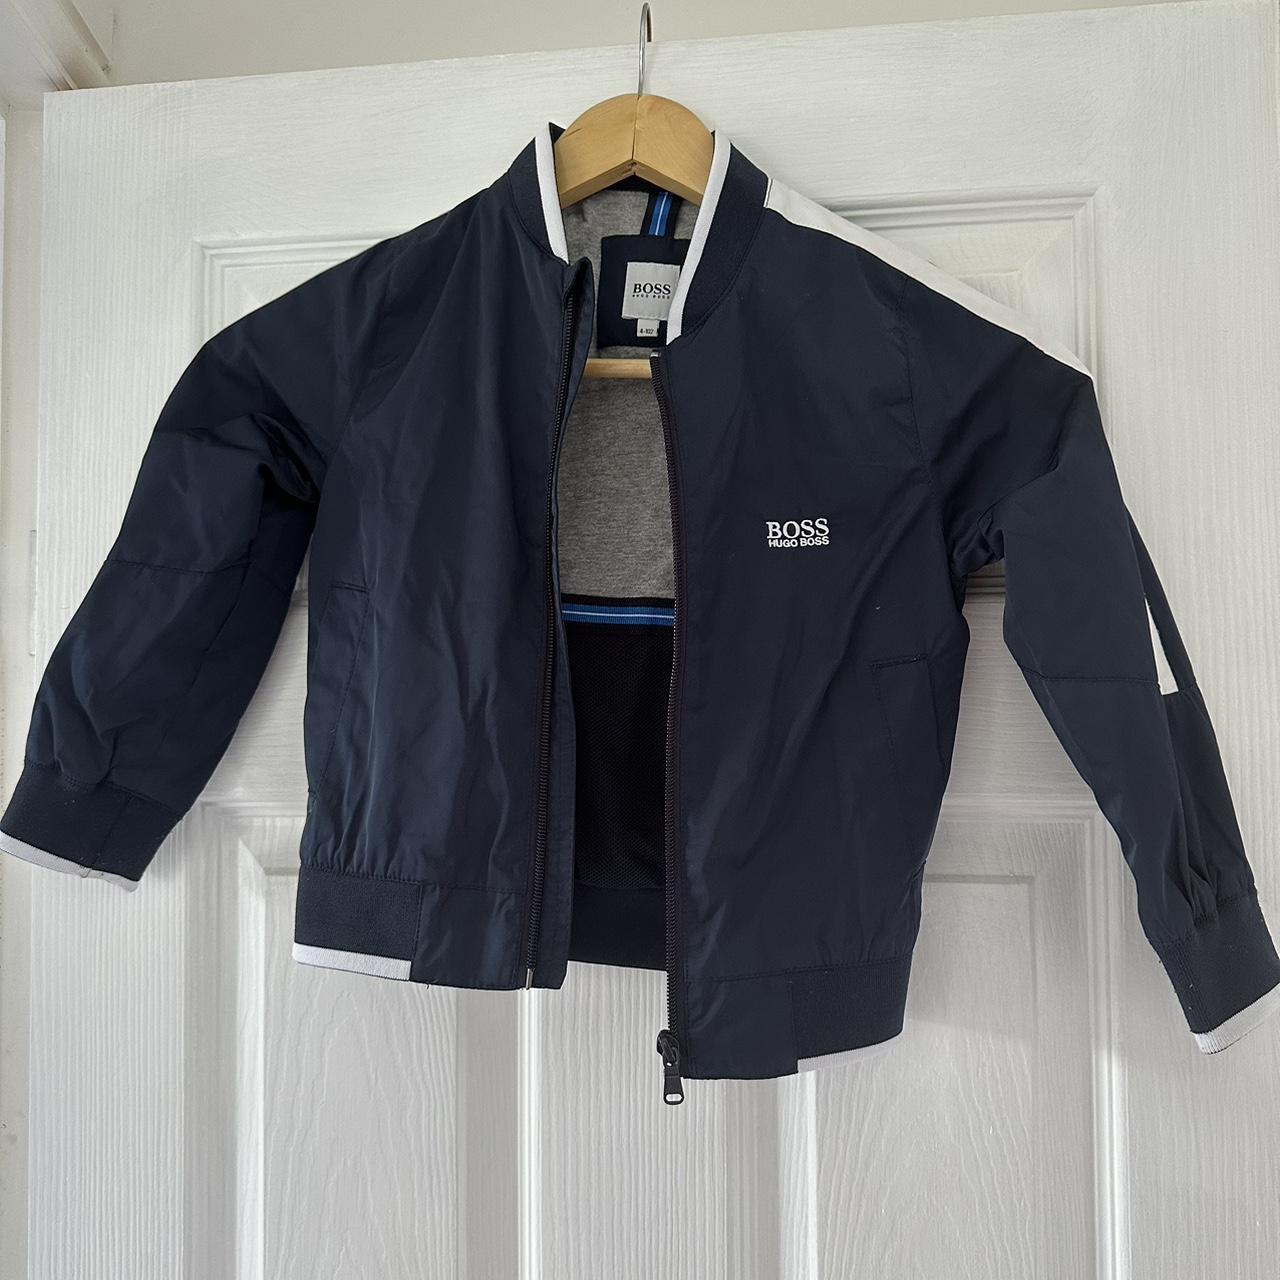 Hugo Boss navy bomber jacket Good condition - some... - Depop